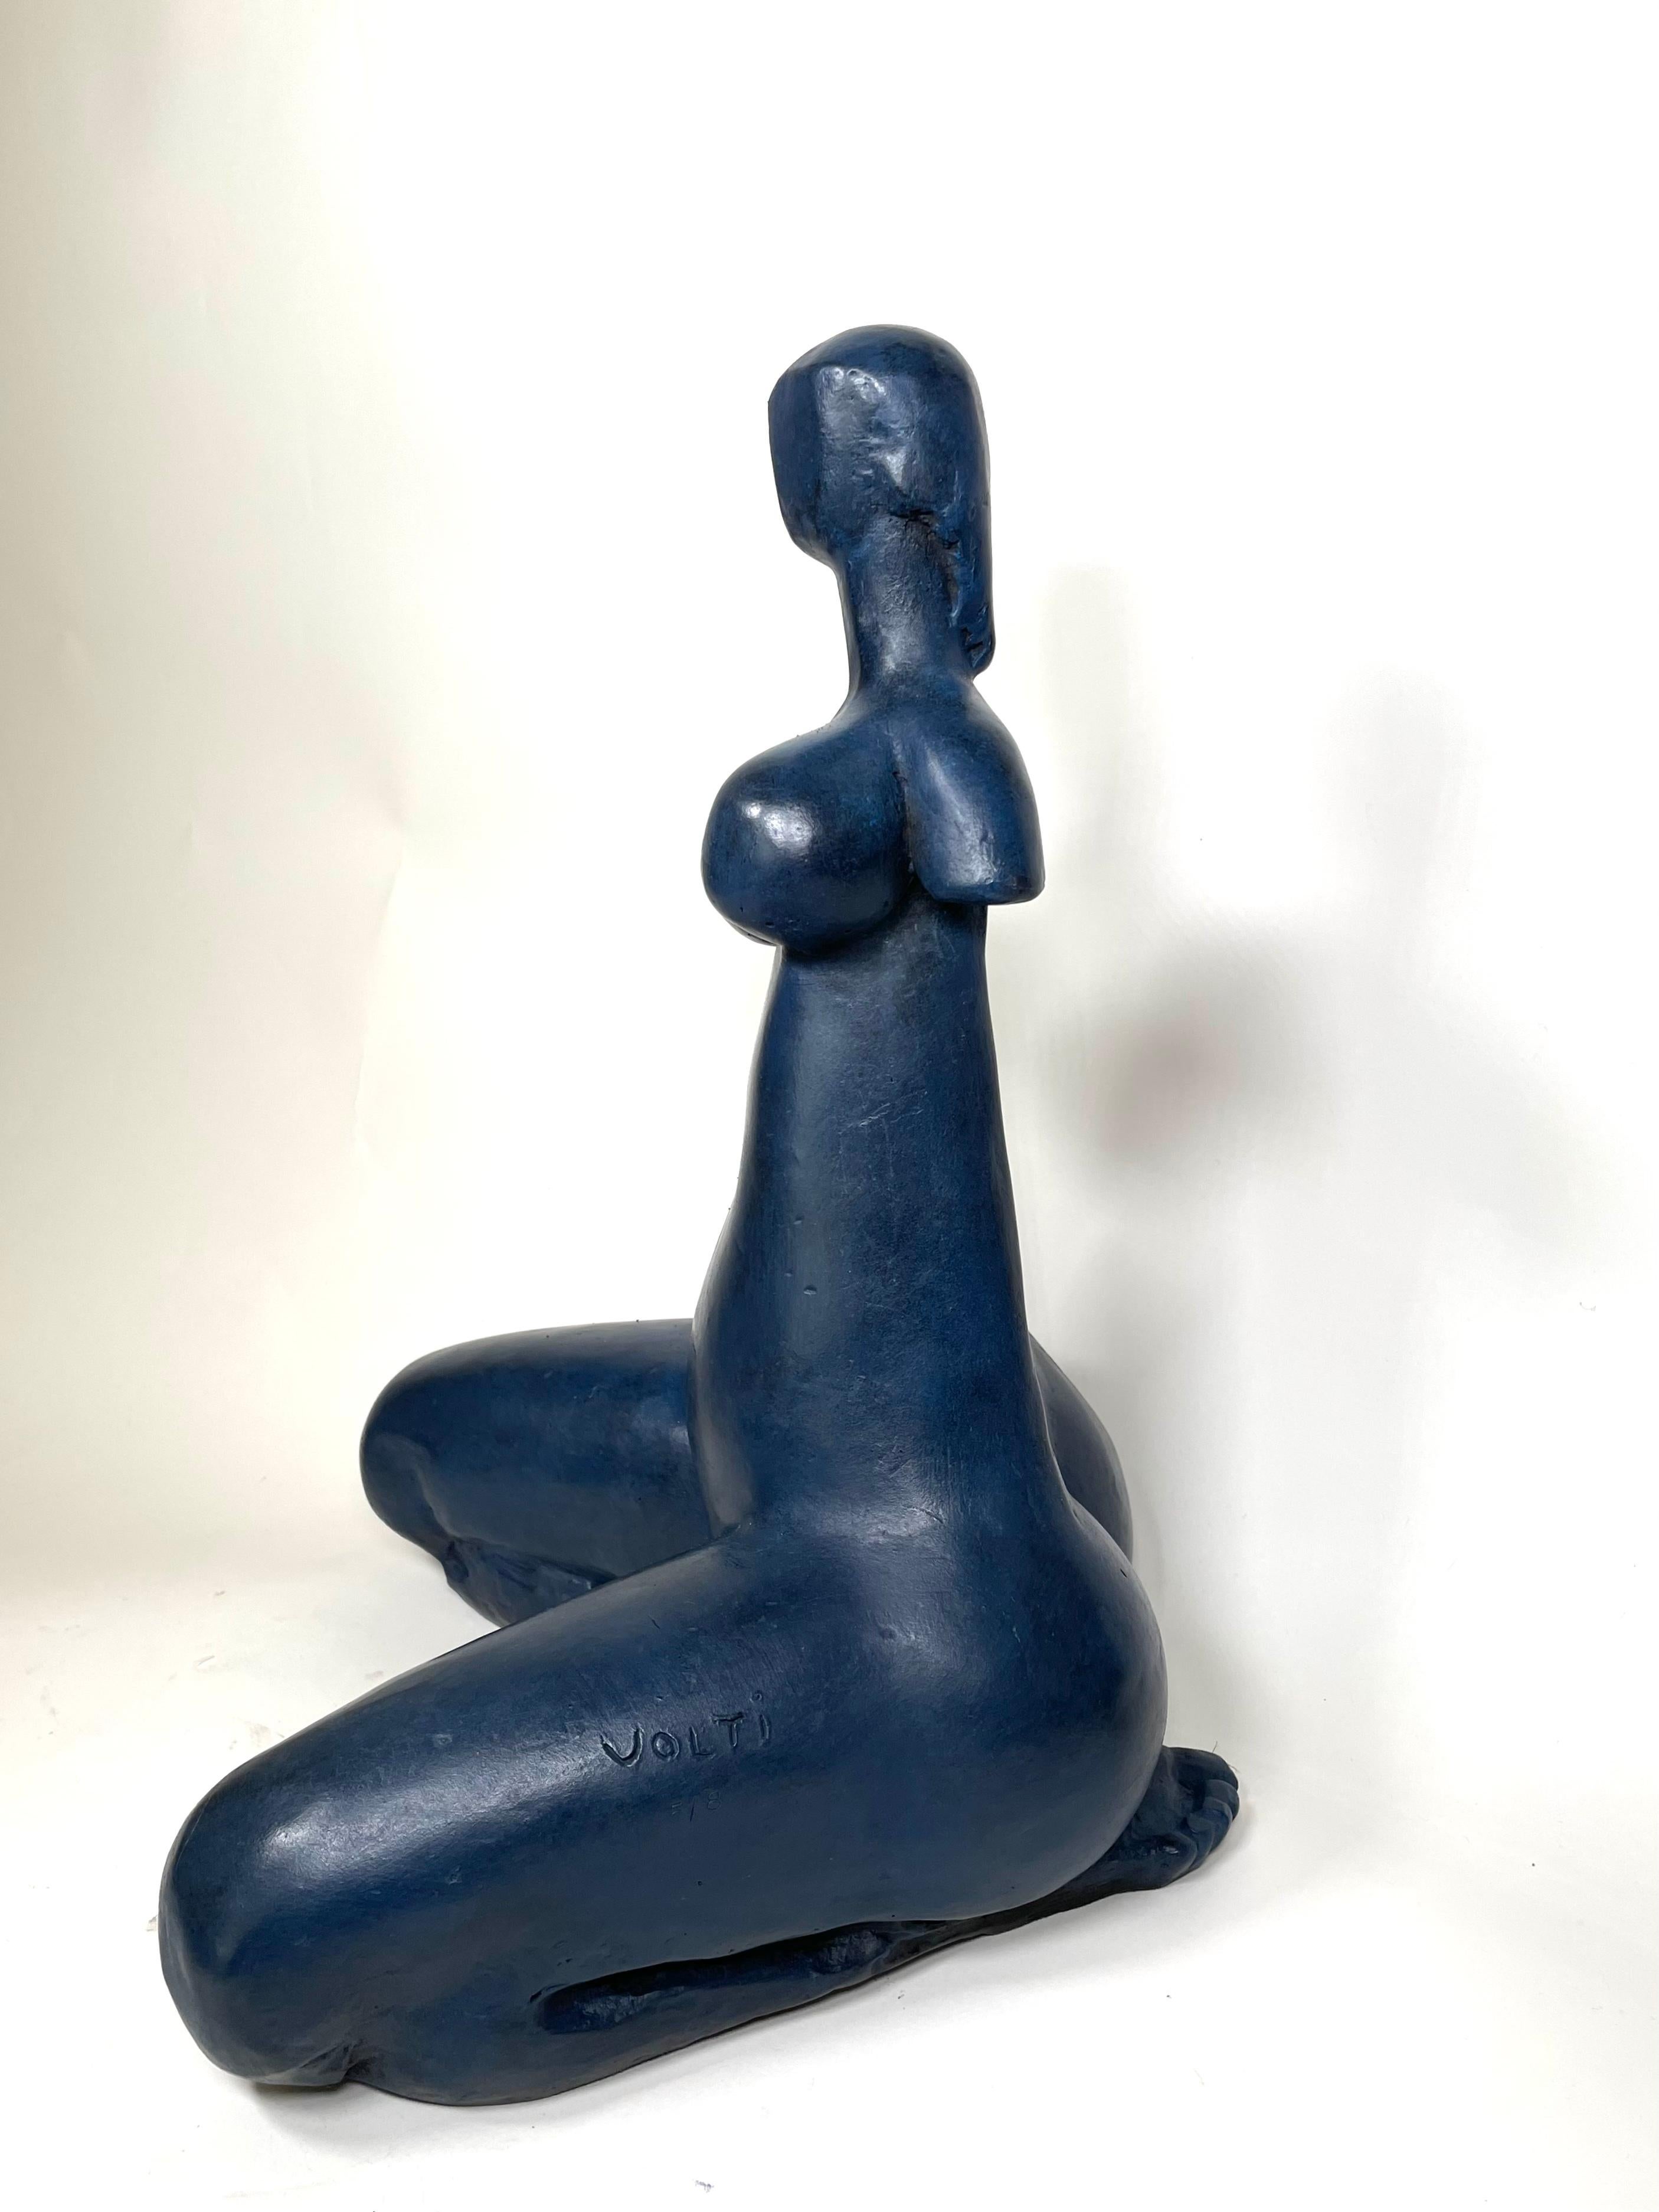 Germinal h cm 40 (blue patina)  - Sculpture by Antoniucci Volti